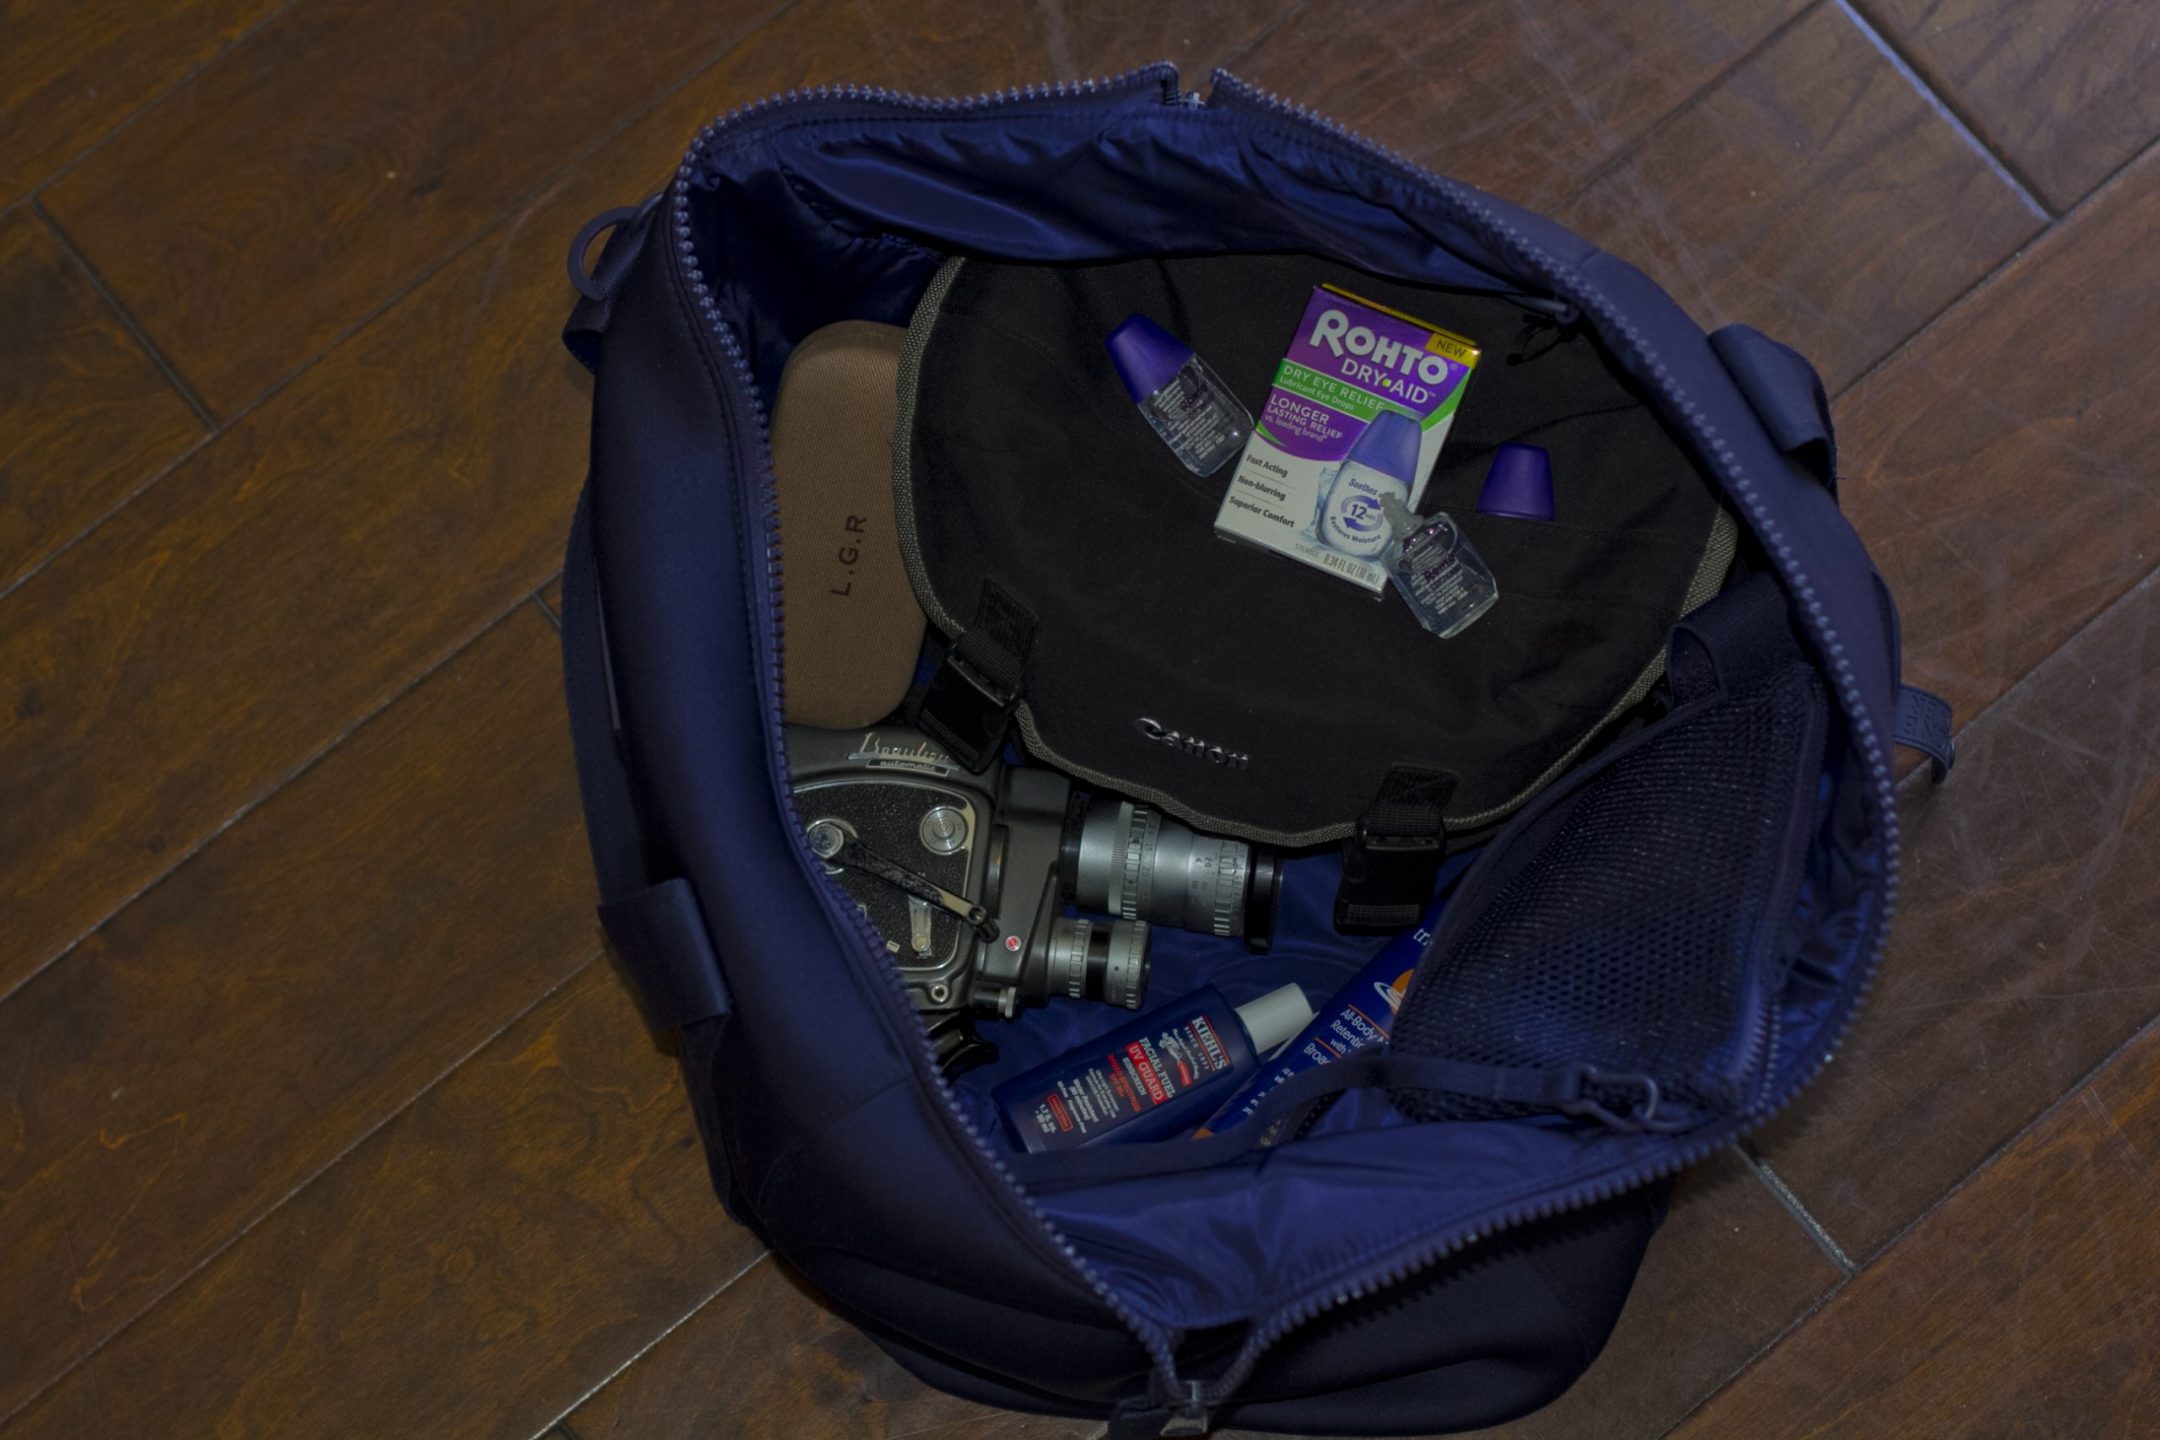 My Road Trip Essentials Bag